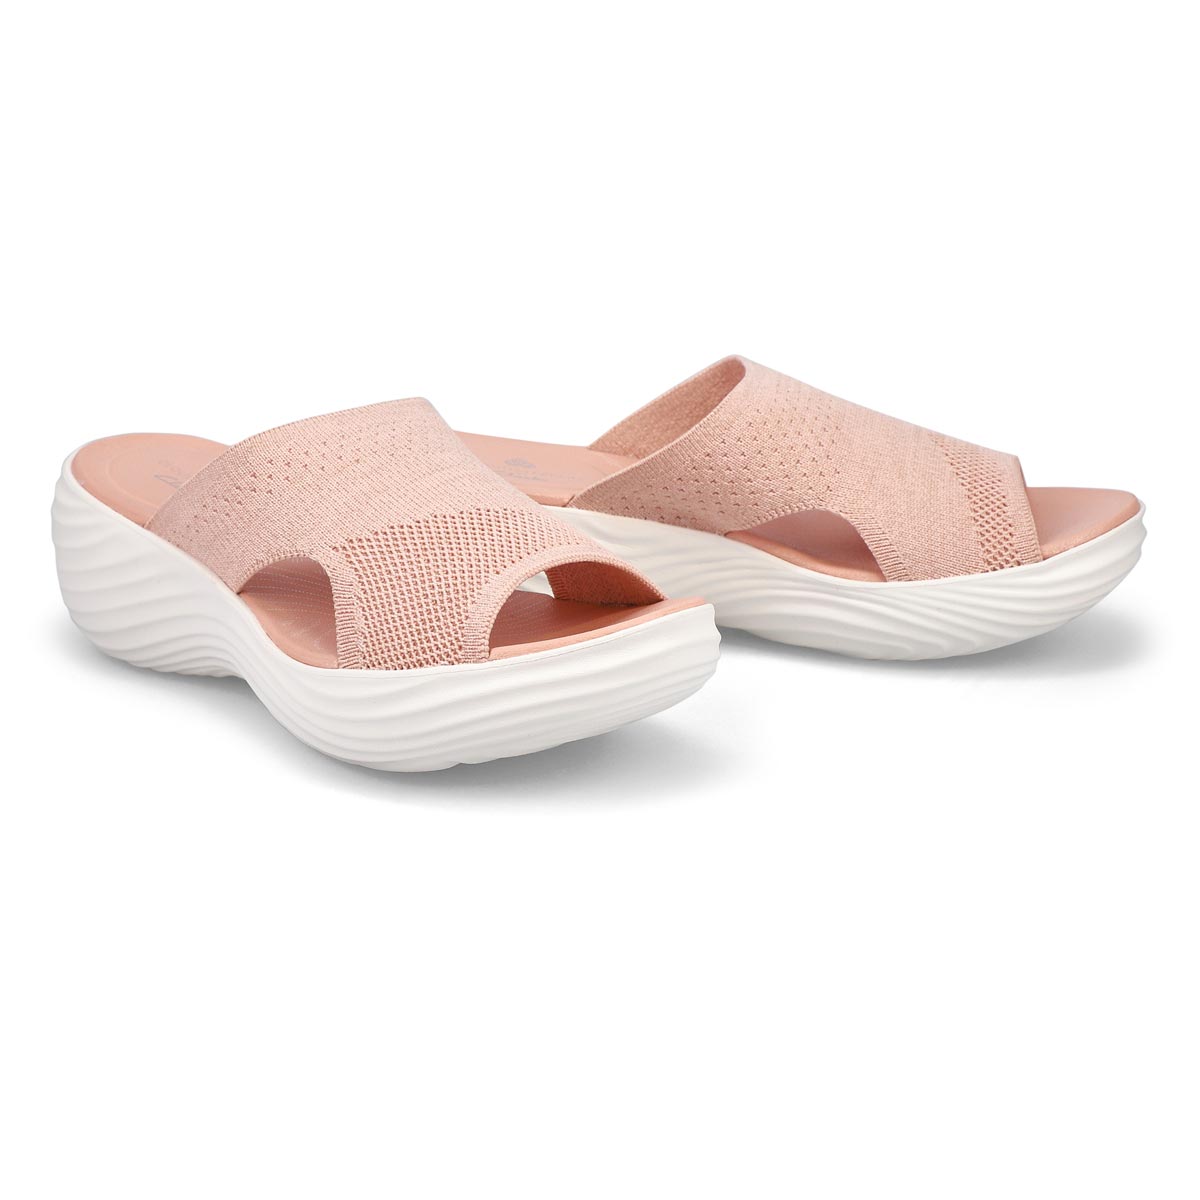 Women's Marin Coral Slide Sandal - Light Pink